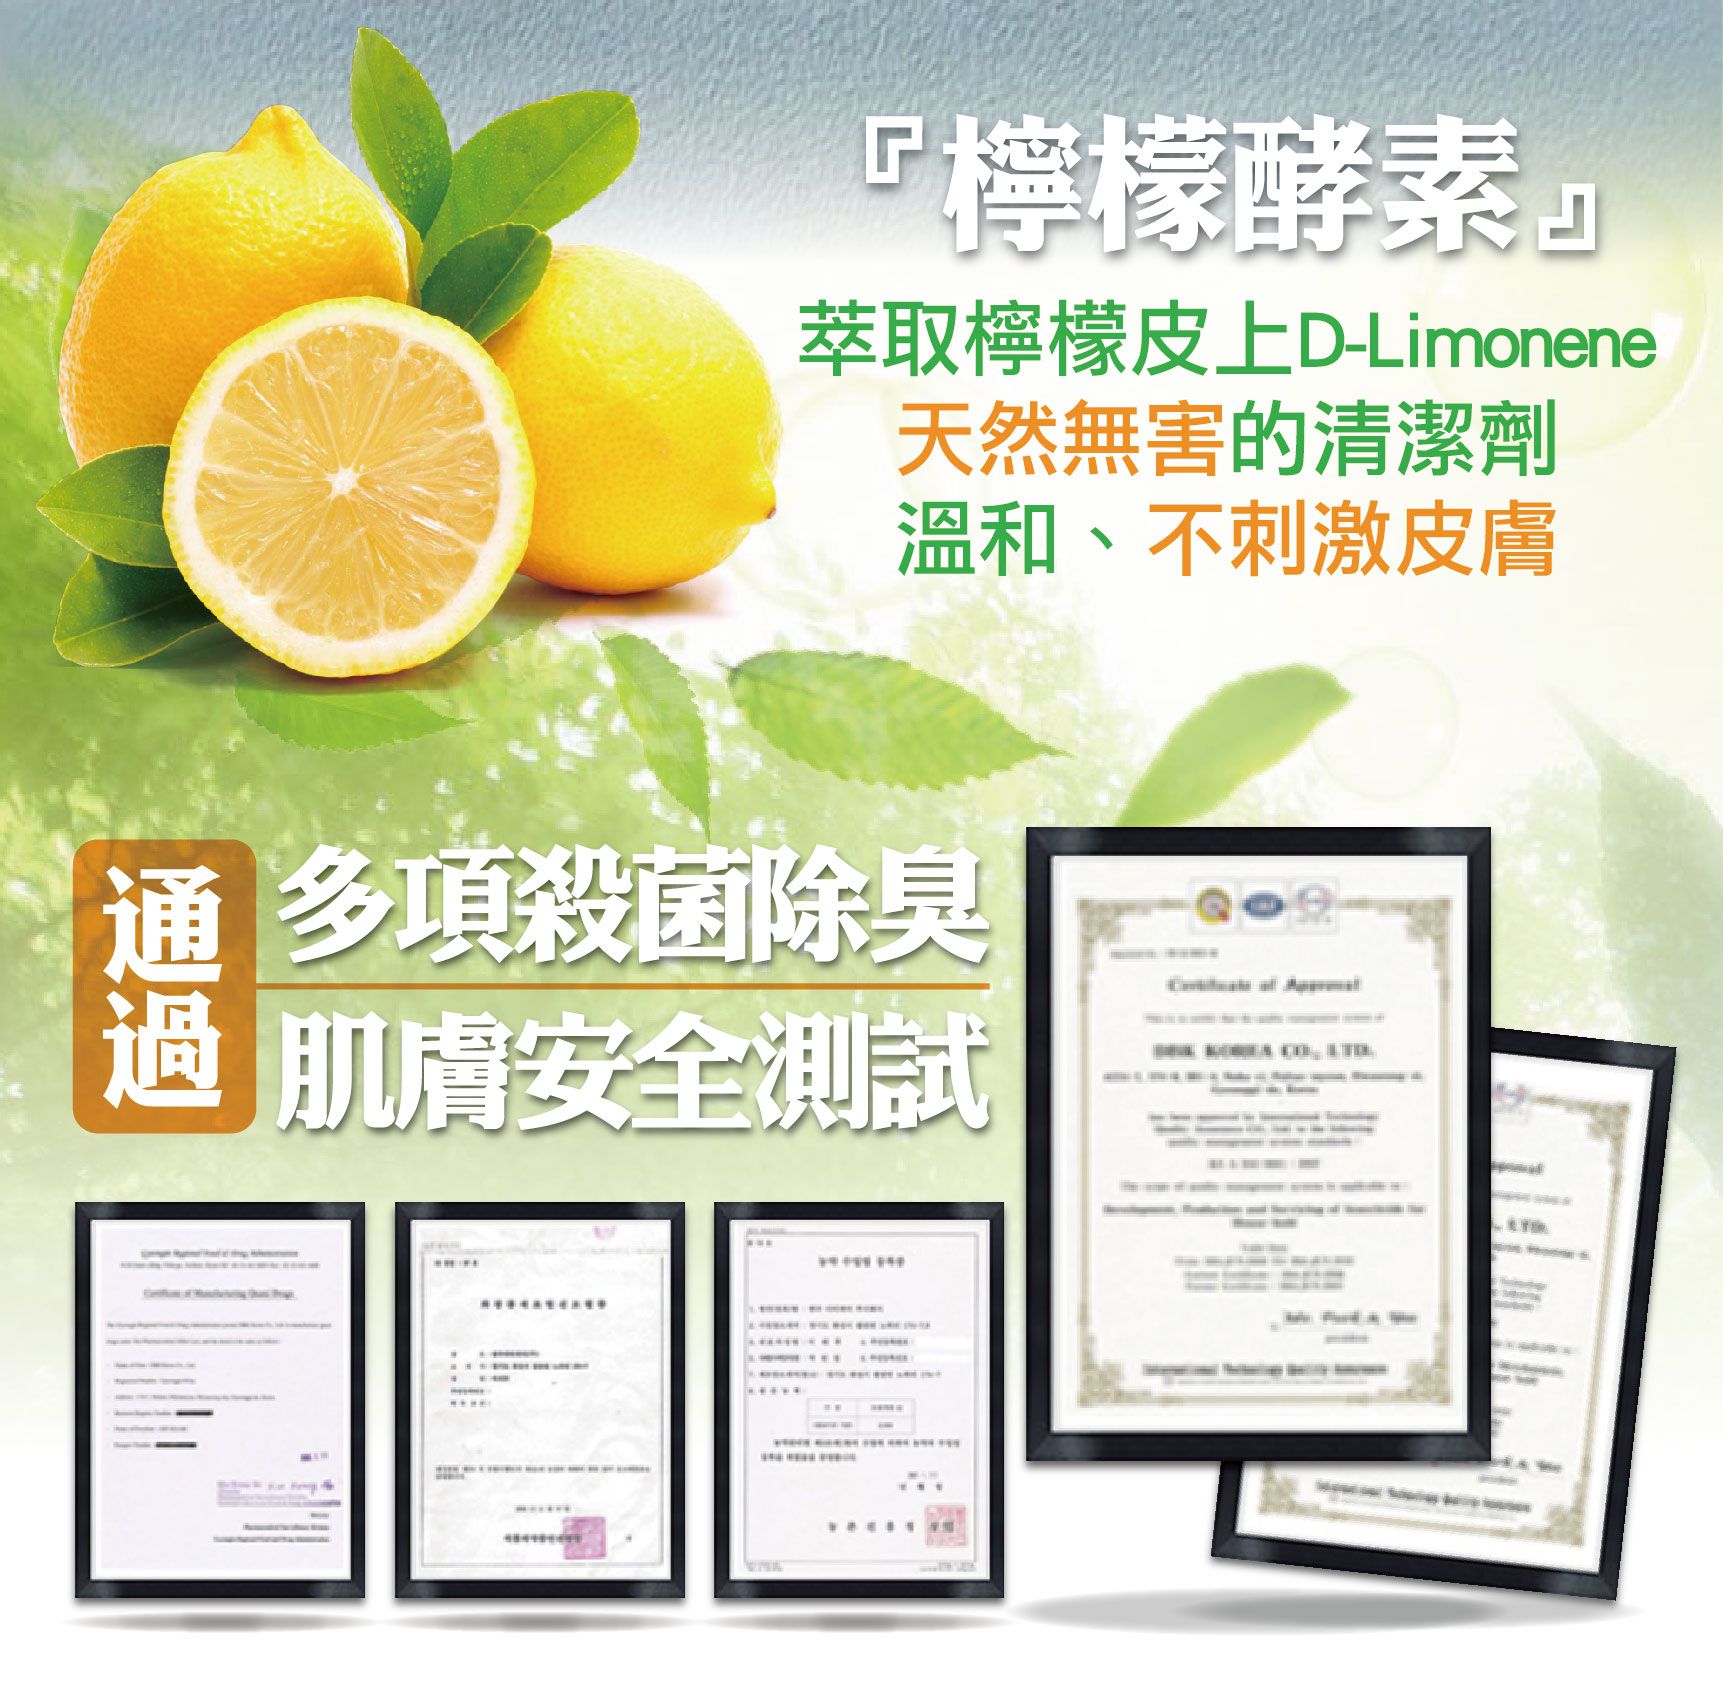 Relaxed萬能清潔劑是用天然檸檬酵素製成，通過多個國家安全認證。不傷害皮膚